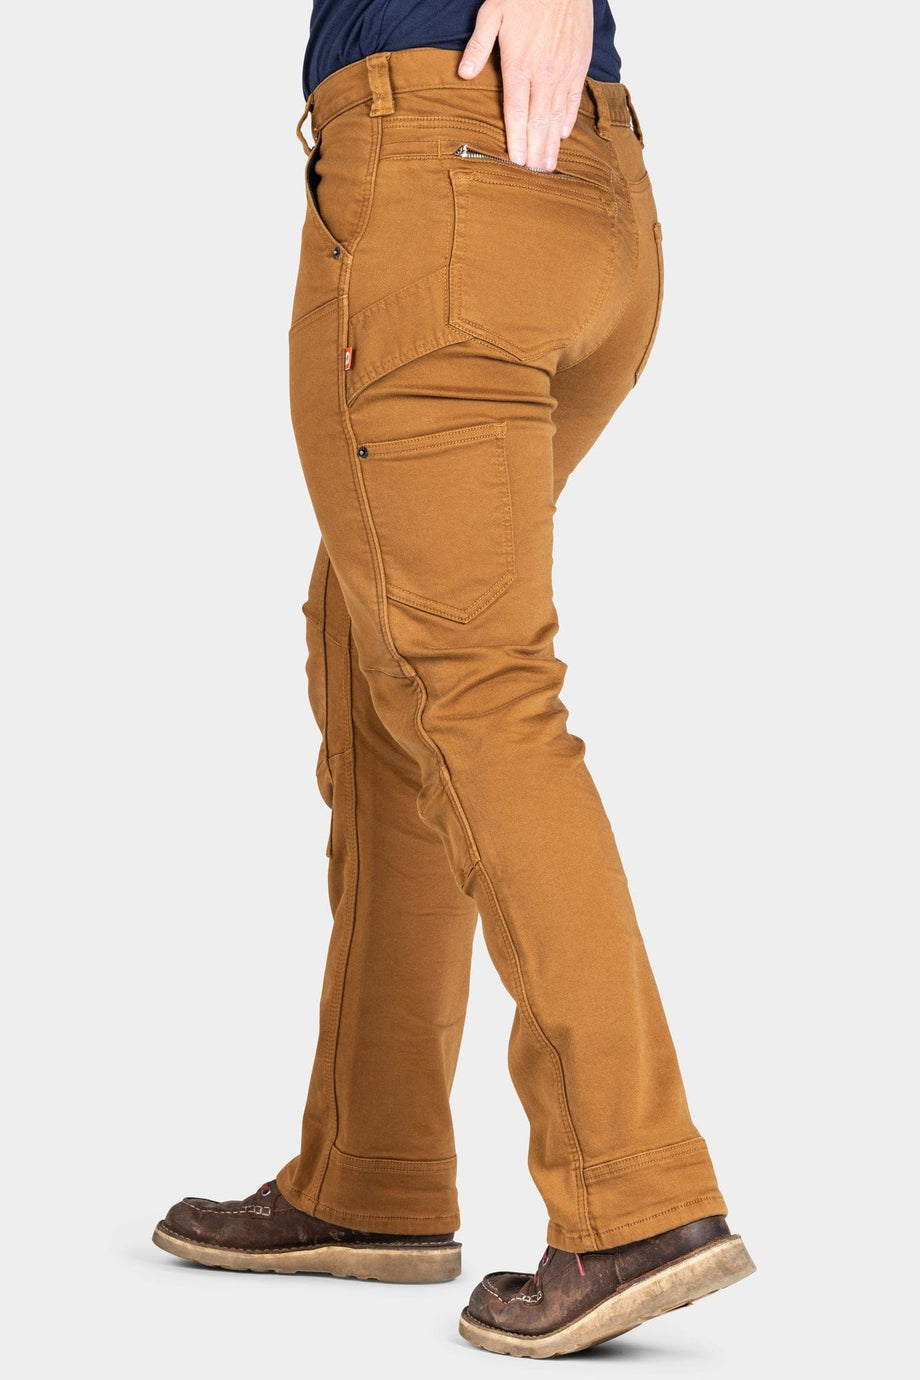 Dovetail Workwear Women's Saddle Brown Canvas Work Pants (14 X 32